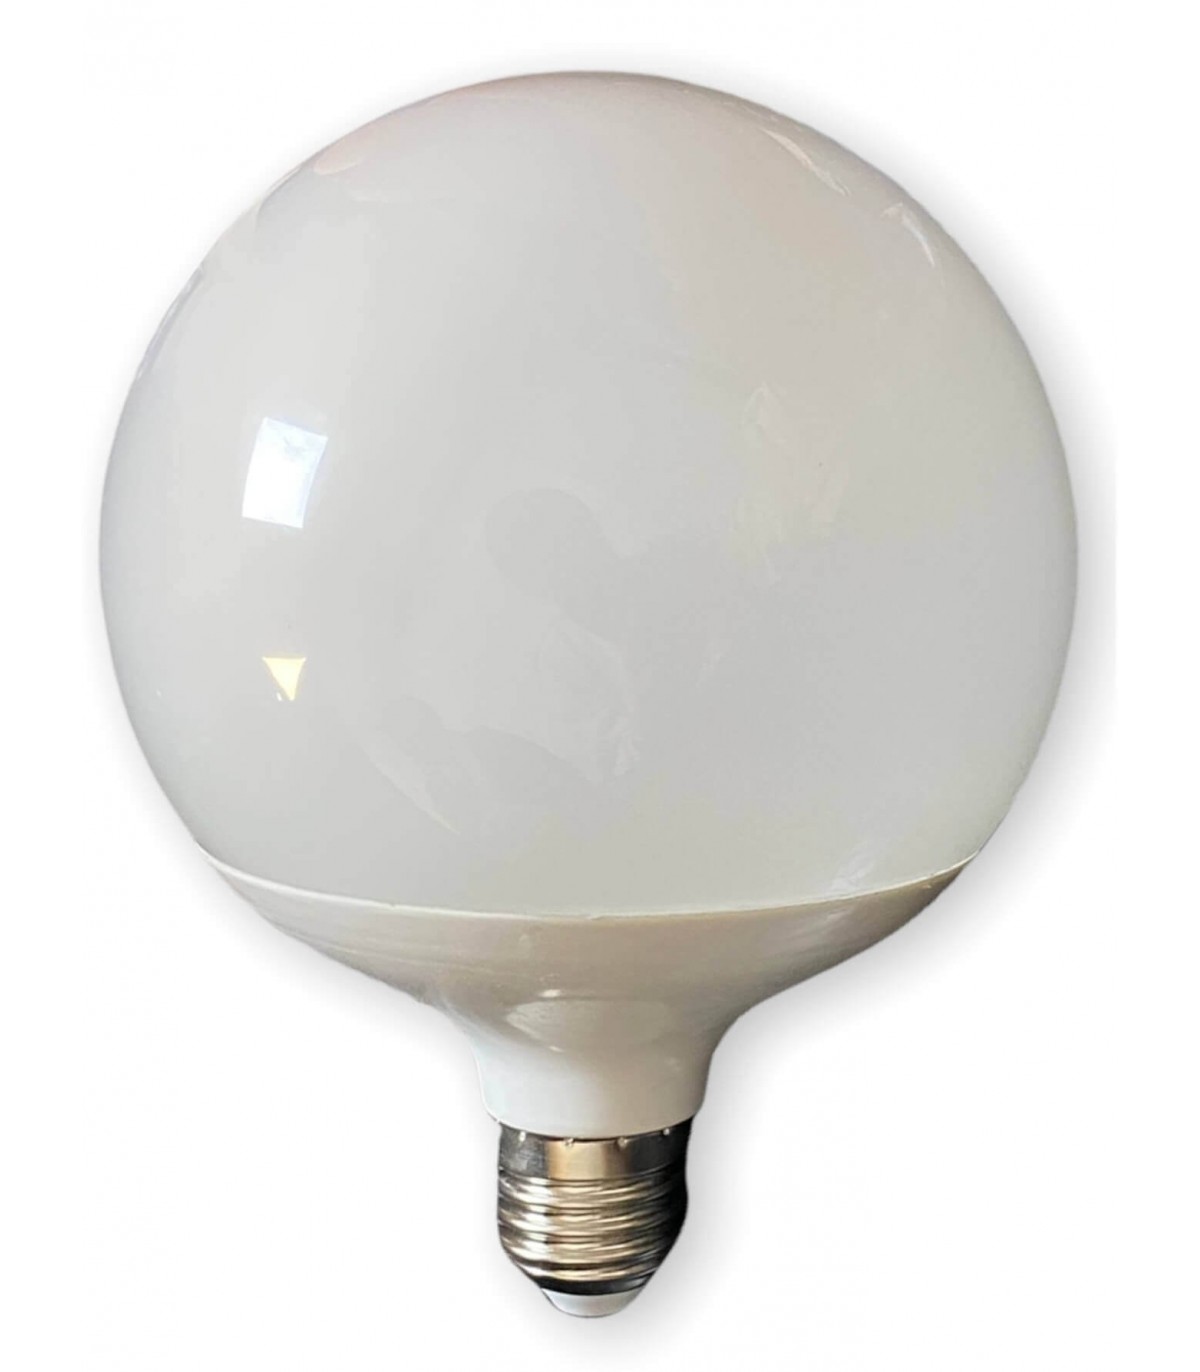 Ampoule LED Philips Standart A60 6W substitut 40W 470lumens Blanc